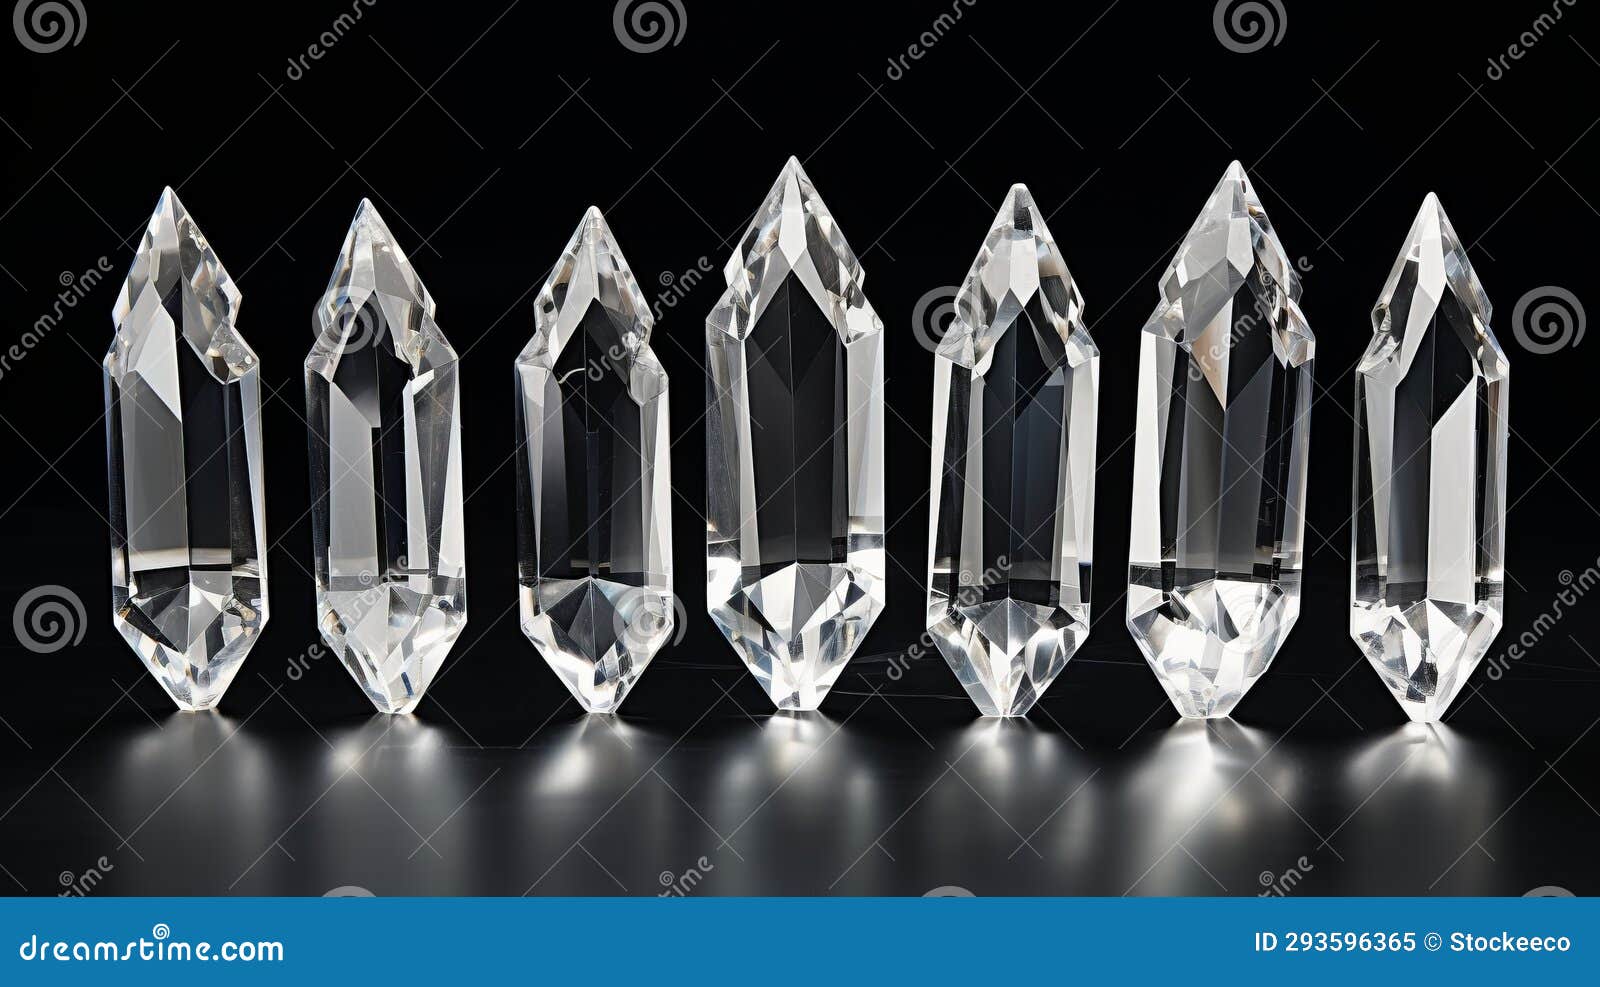 quartz-cut-diamonds: a stunning display of five crystal pointers